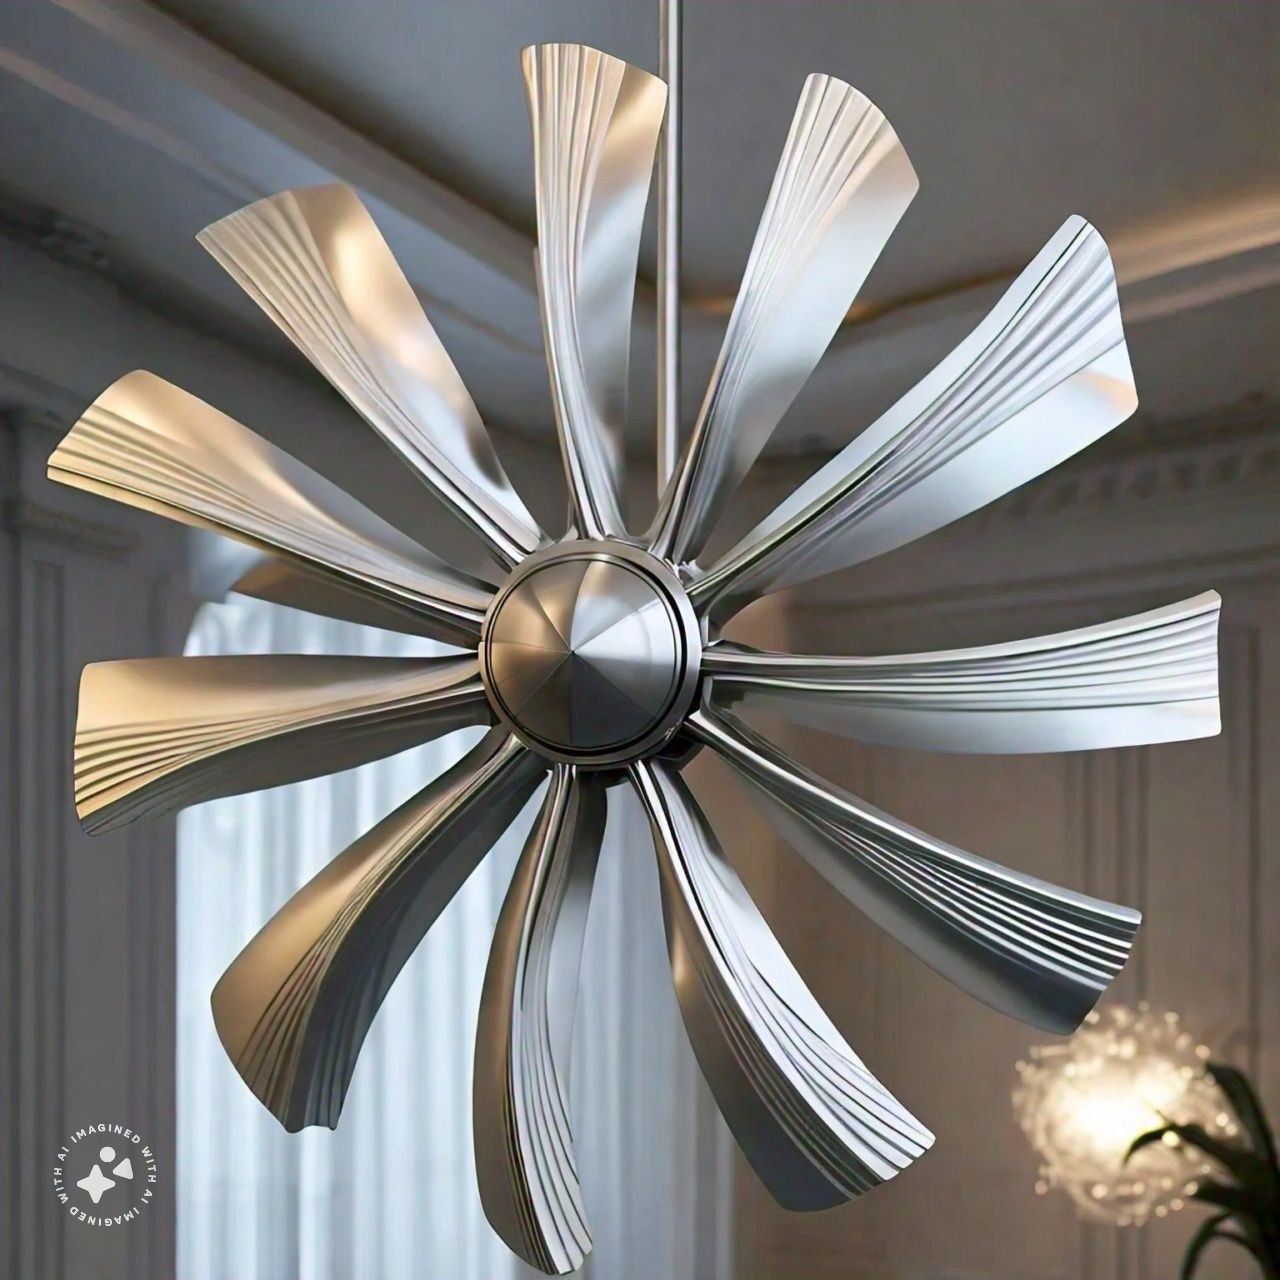 Fan Blade Design: Maximizing Airflow Efficiency